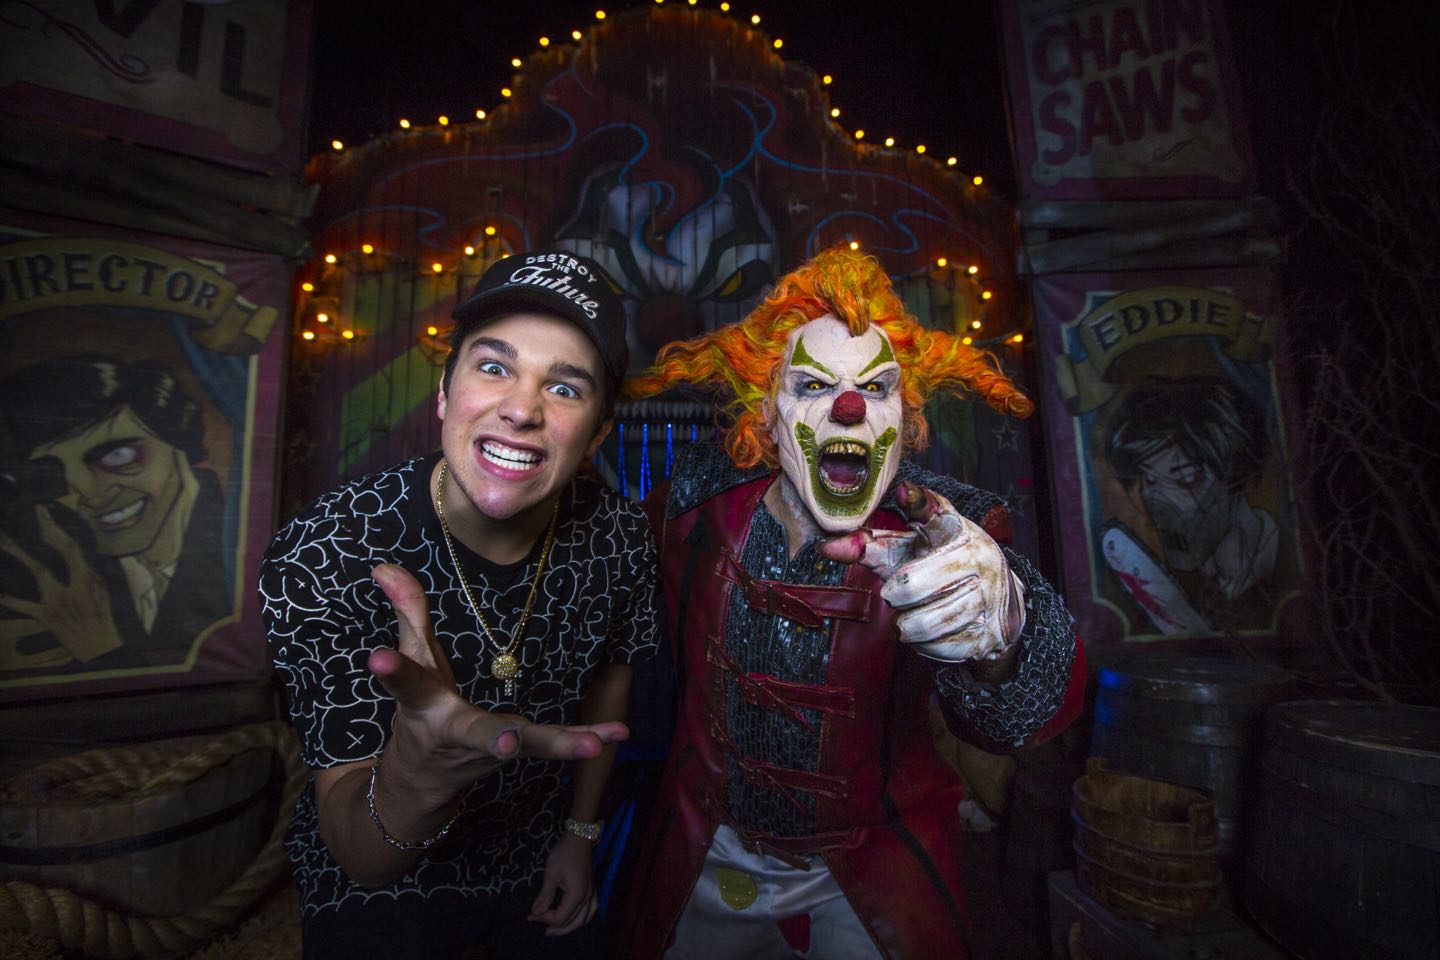 Teen Celebrity Austin Mahone Visits Universal Orlando Resort…and That’s No “Dirty Work”